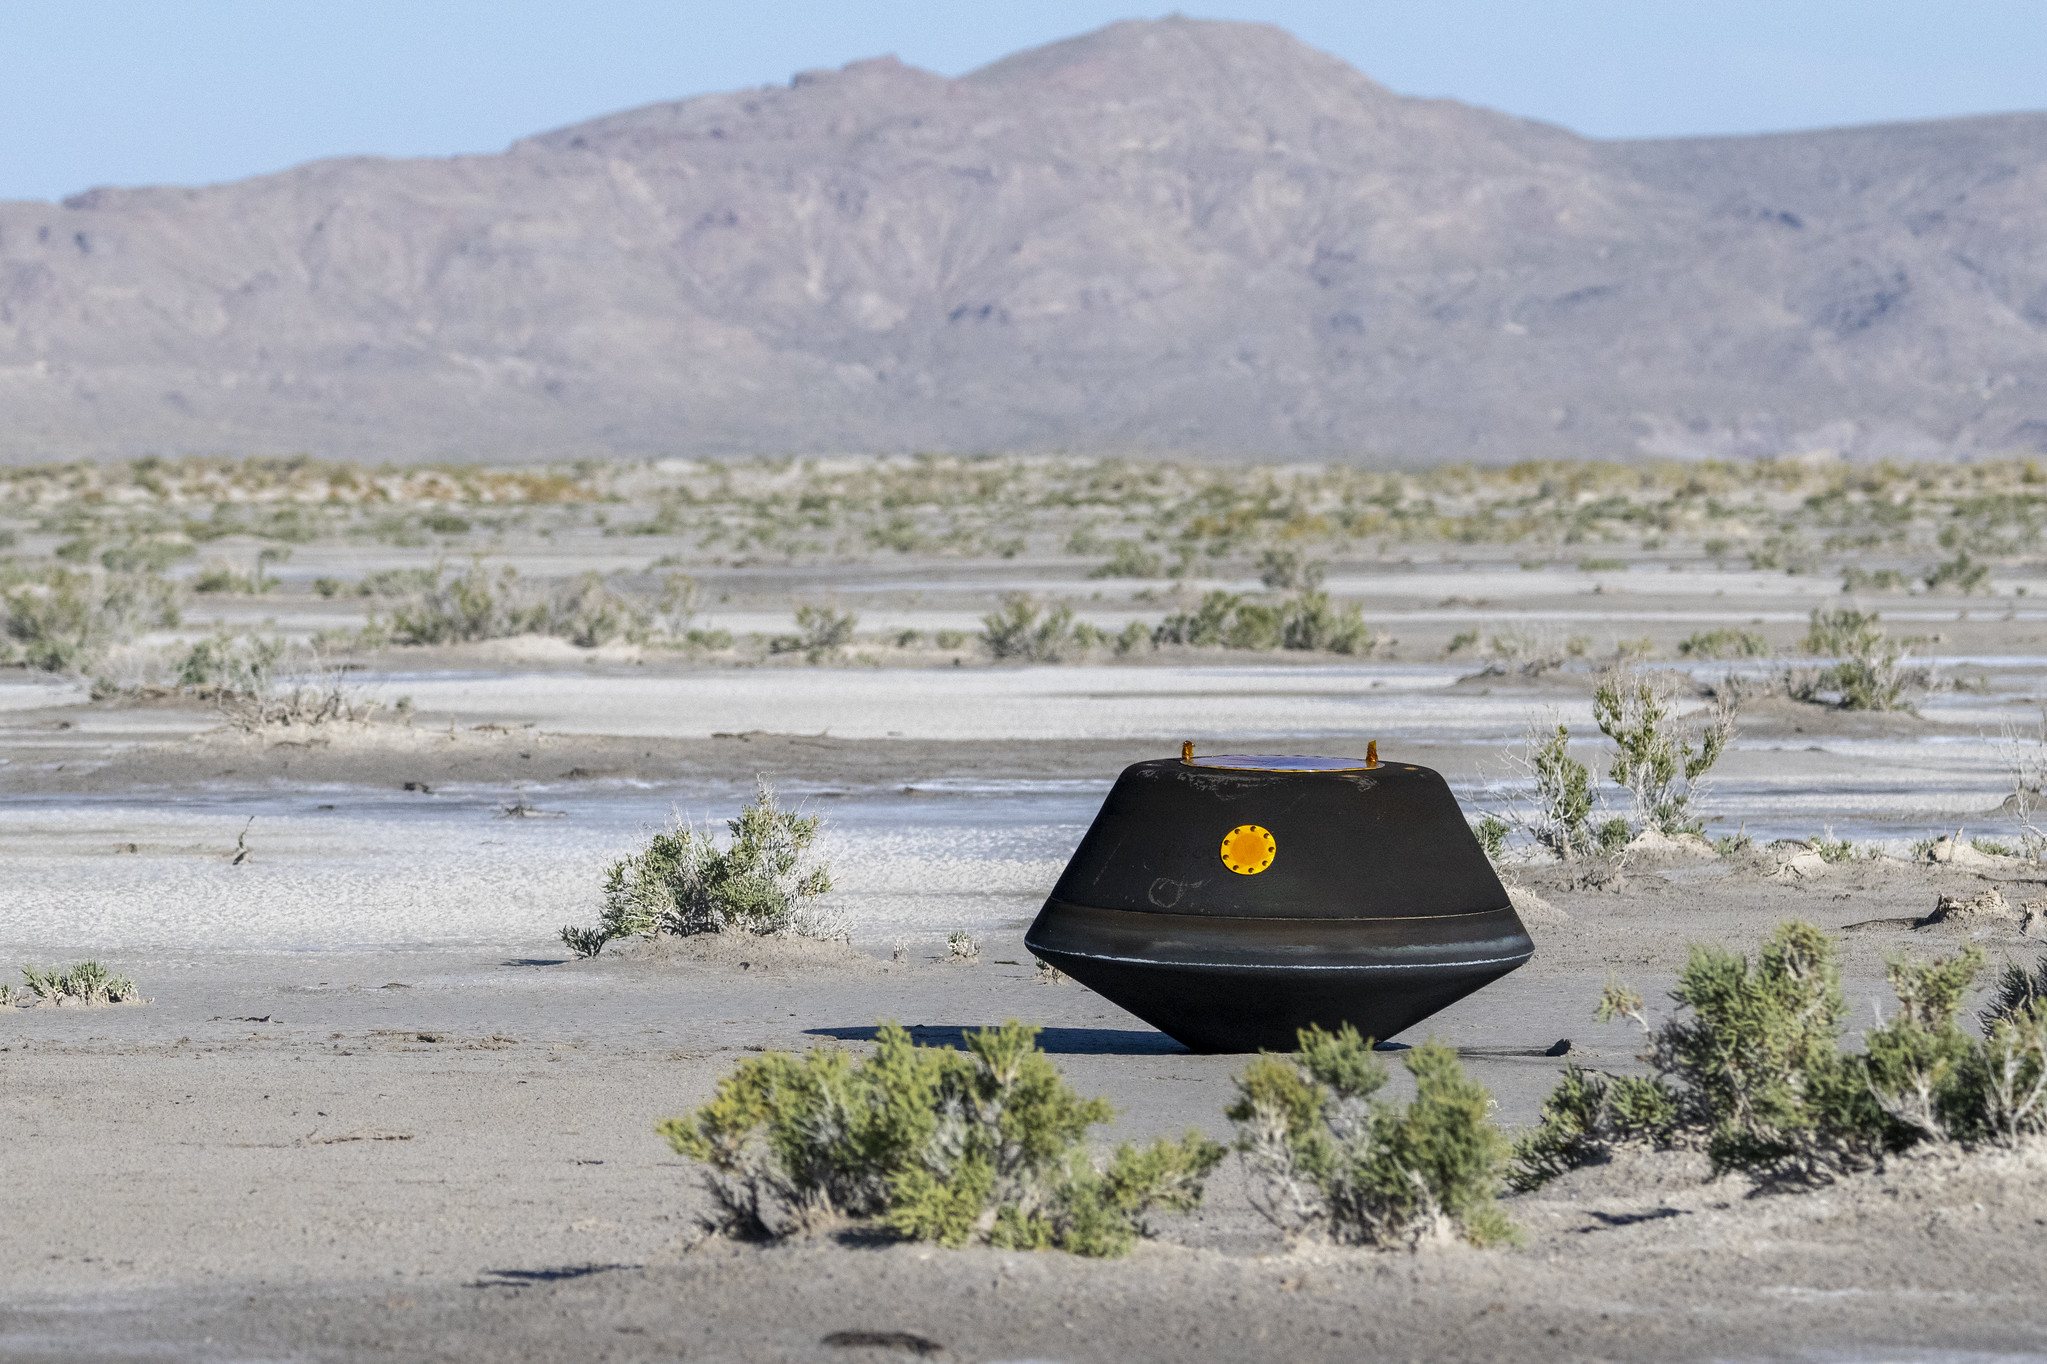 a black capsule sits on desert sand near shrub brush